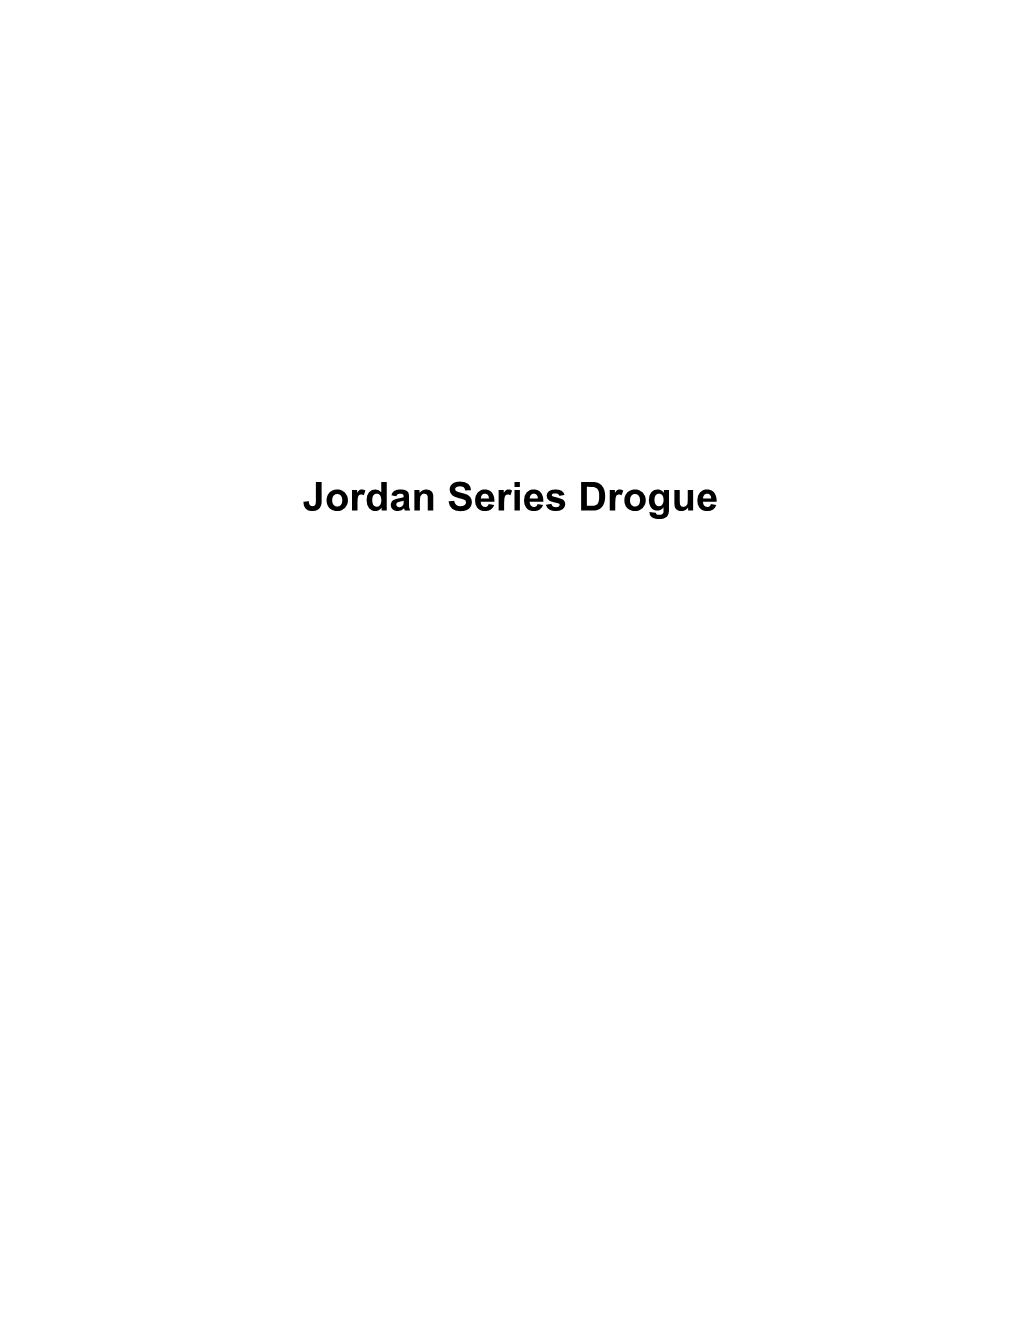 What Is the Jordan Series Drogue